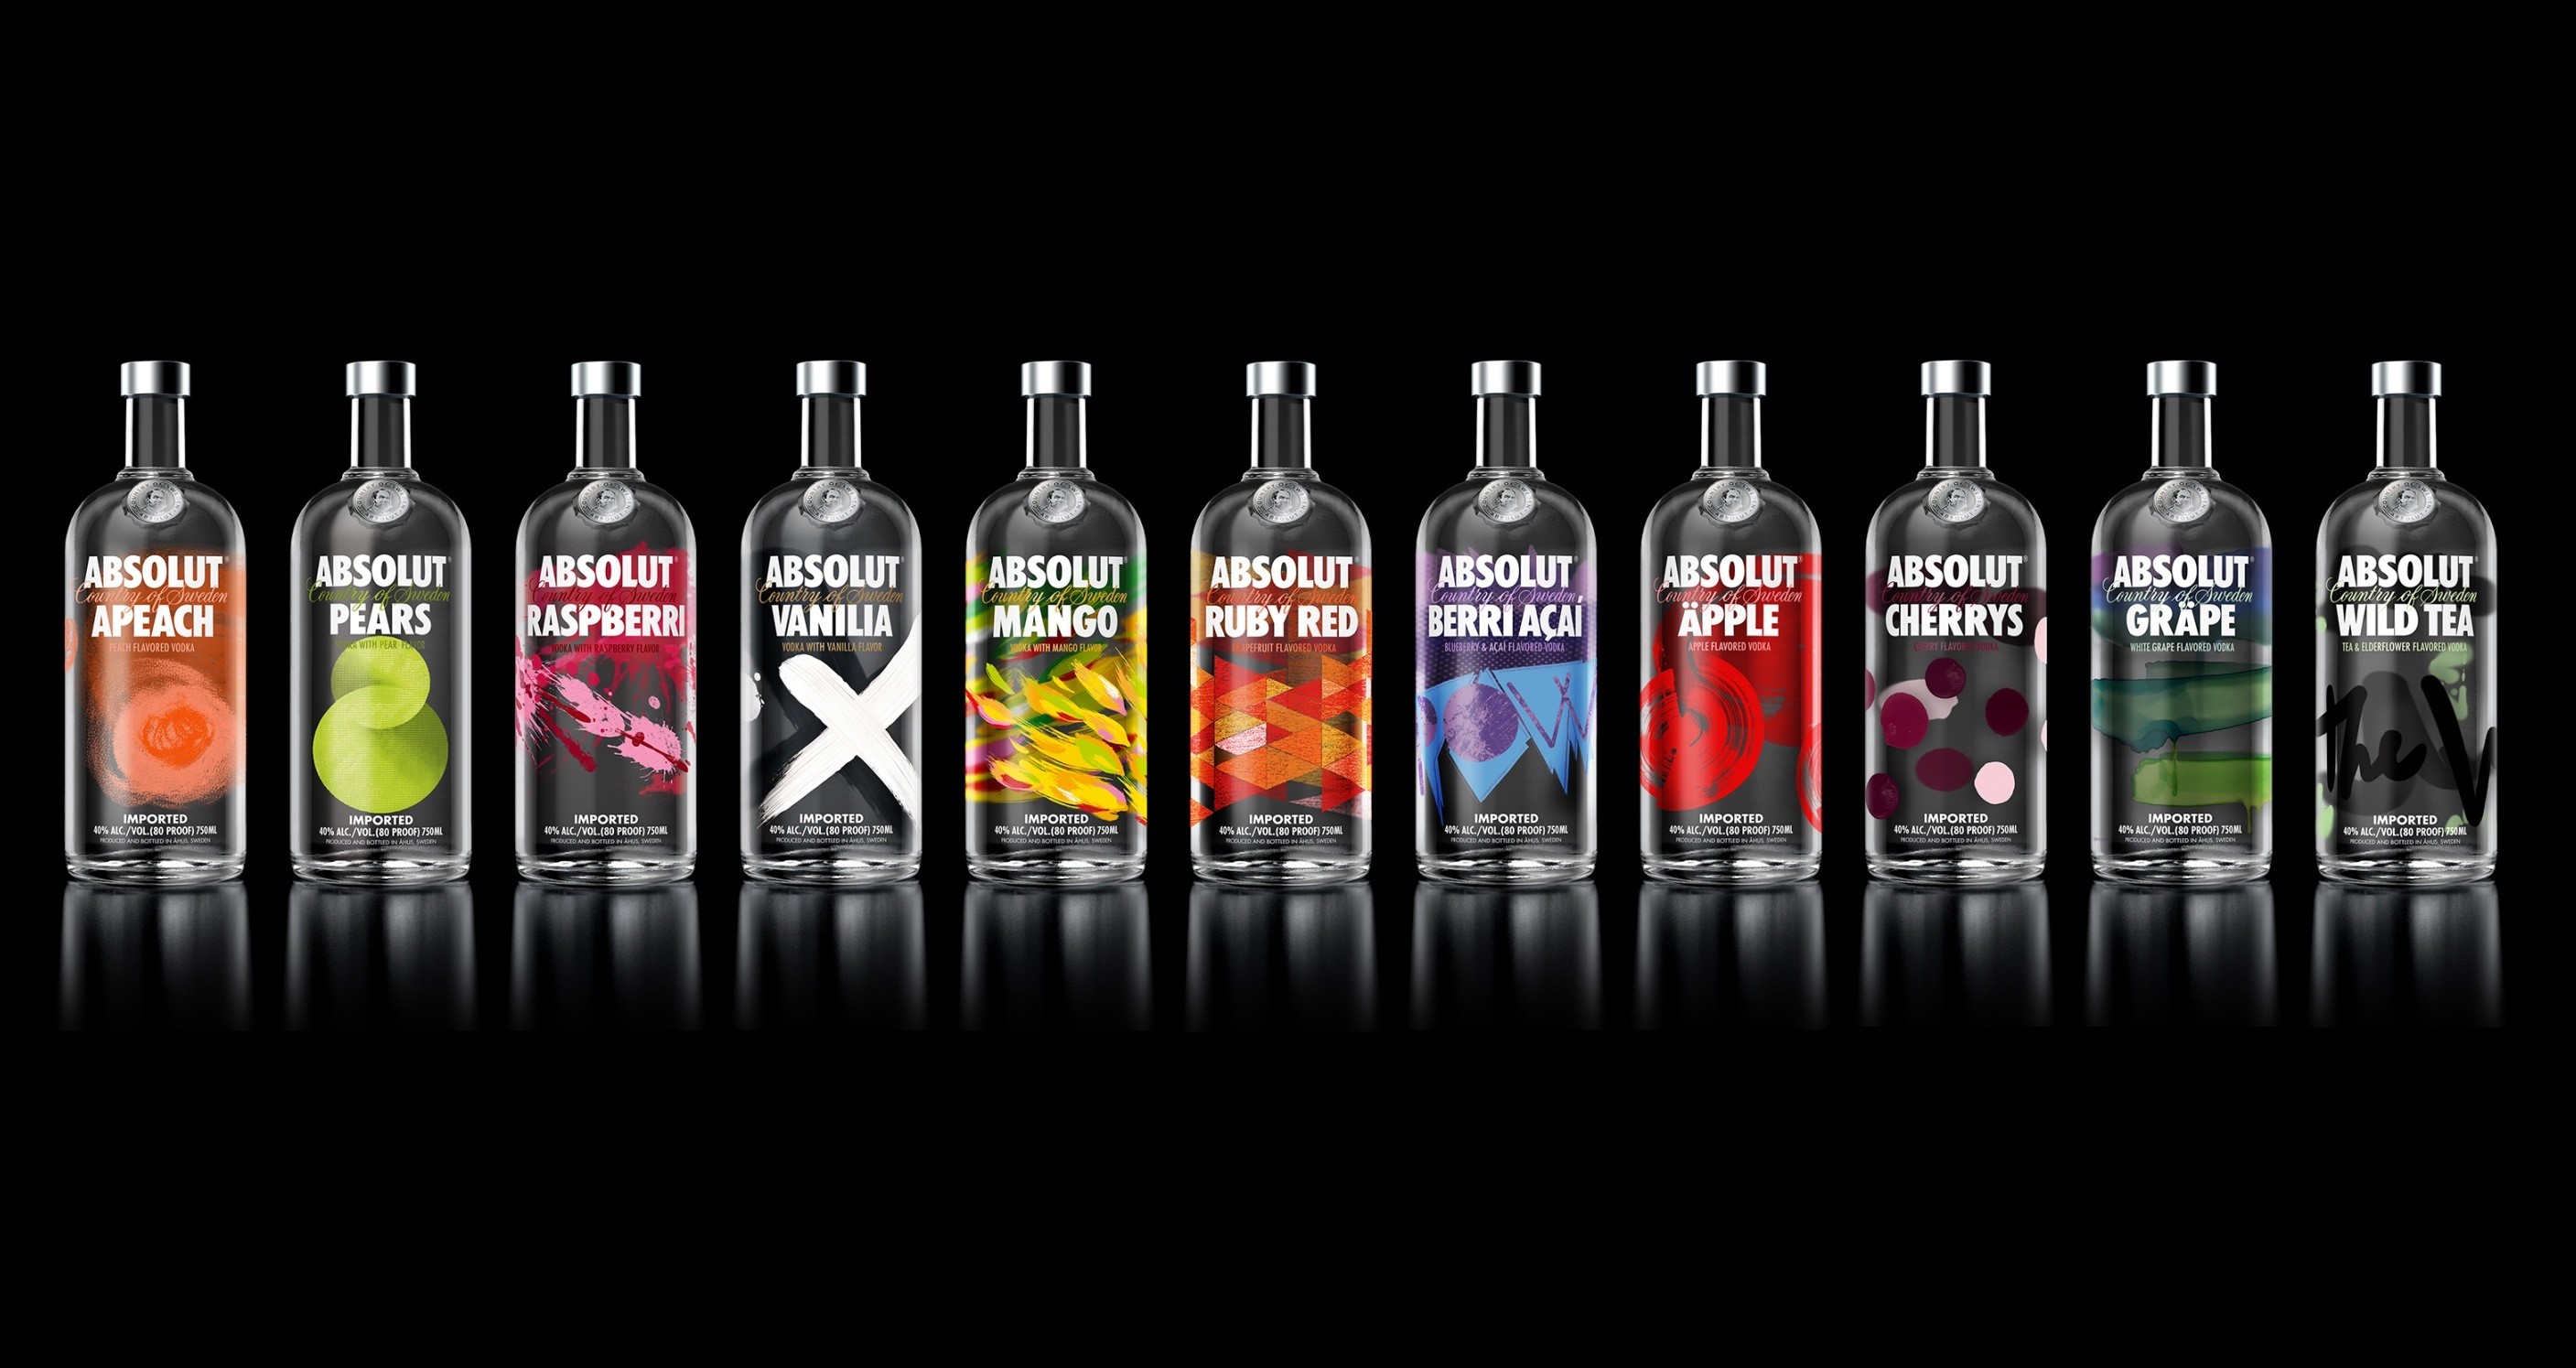 General 2815x1495 Absolut vodka bottles alcohol black background brand simple background